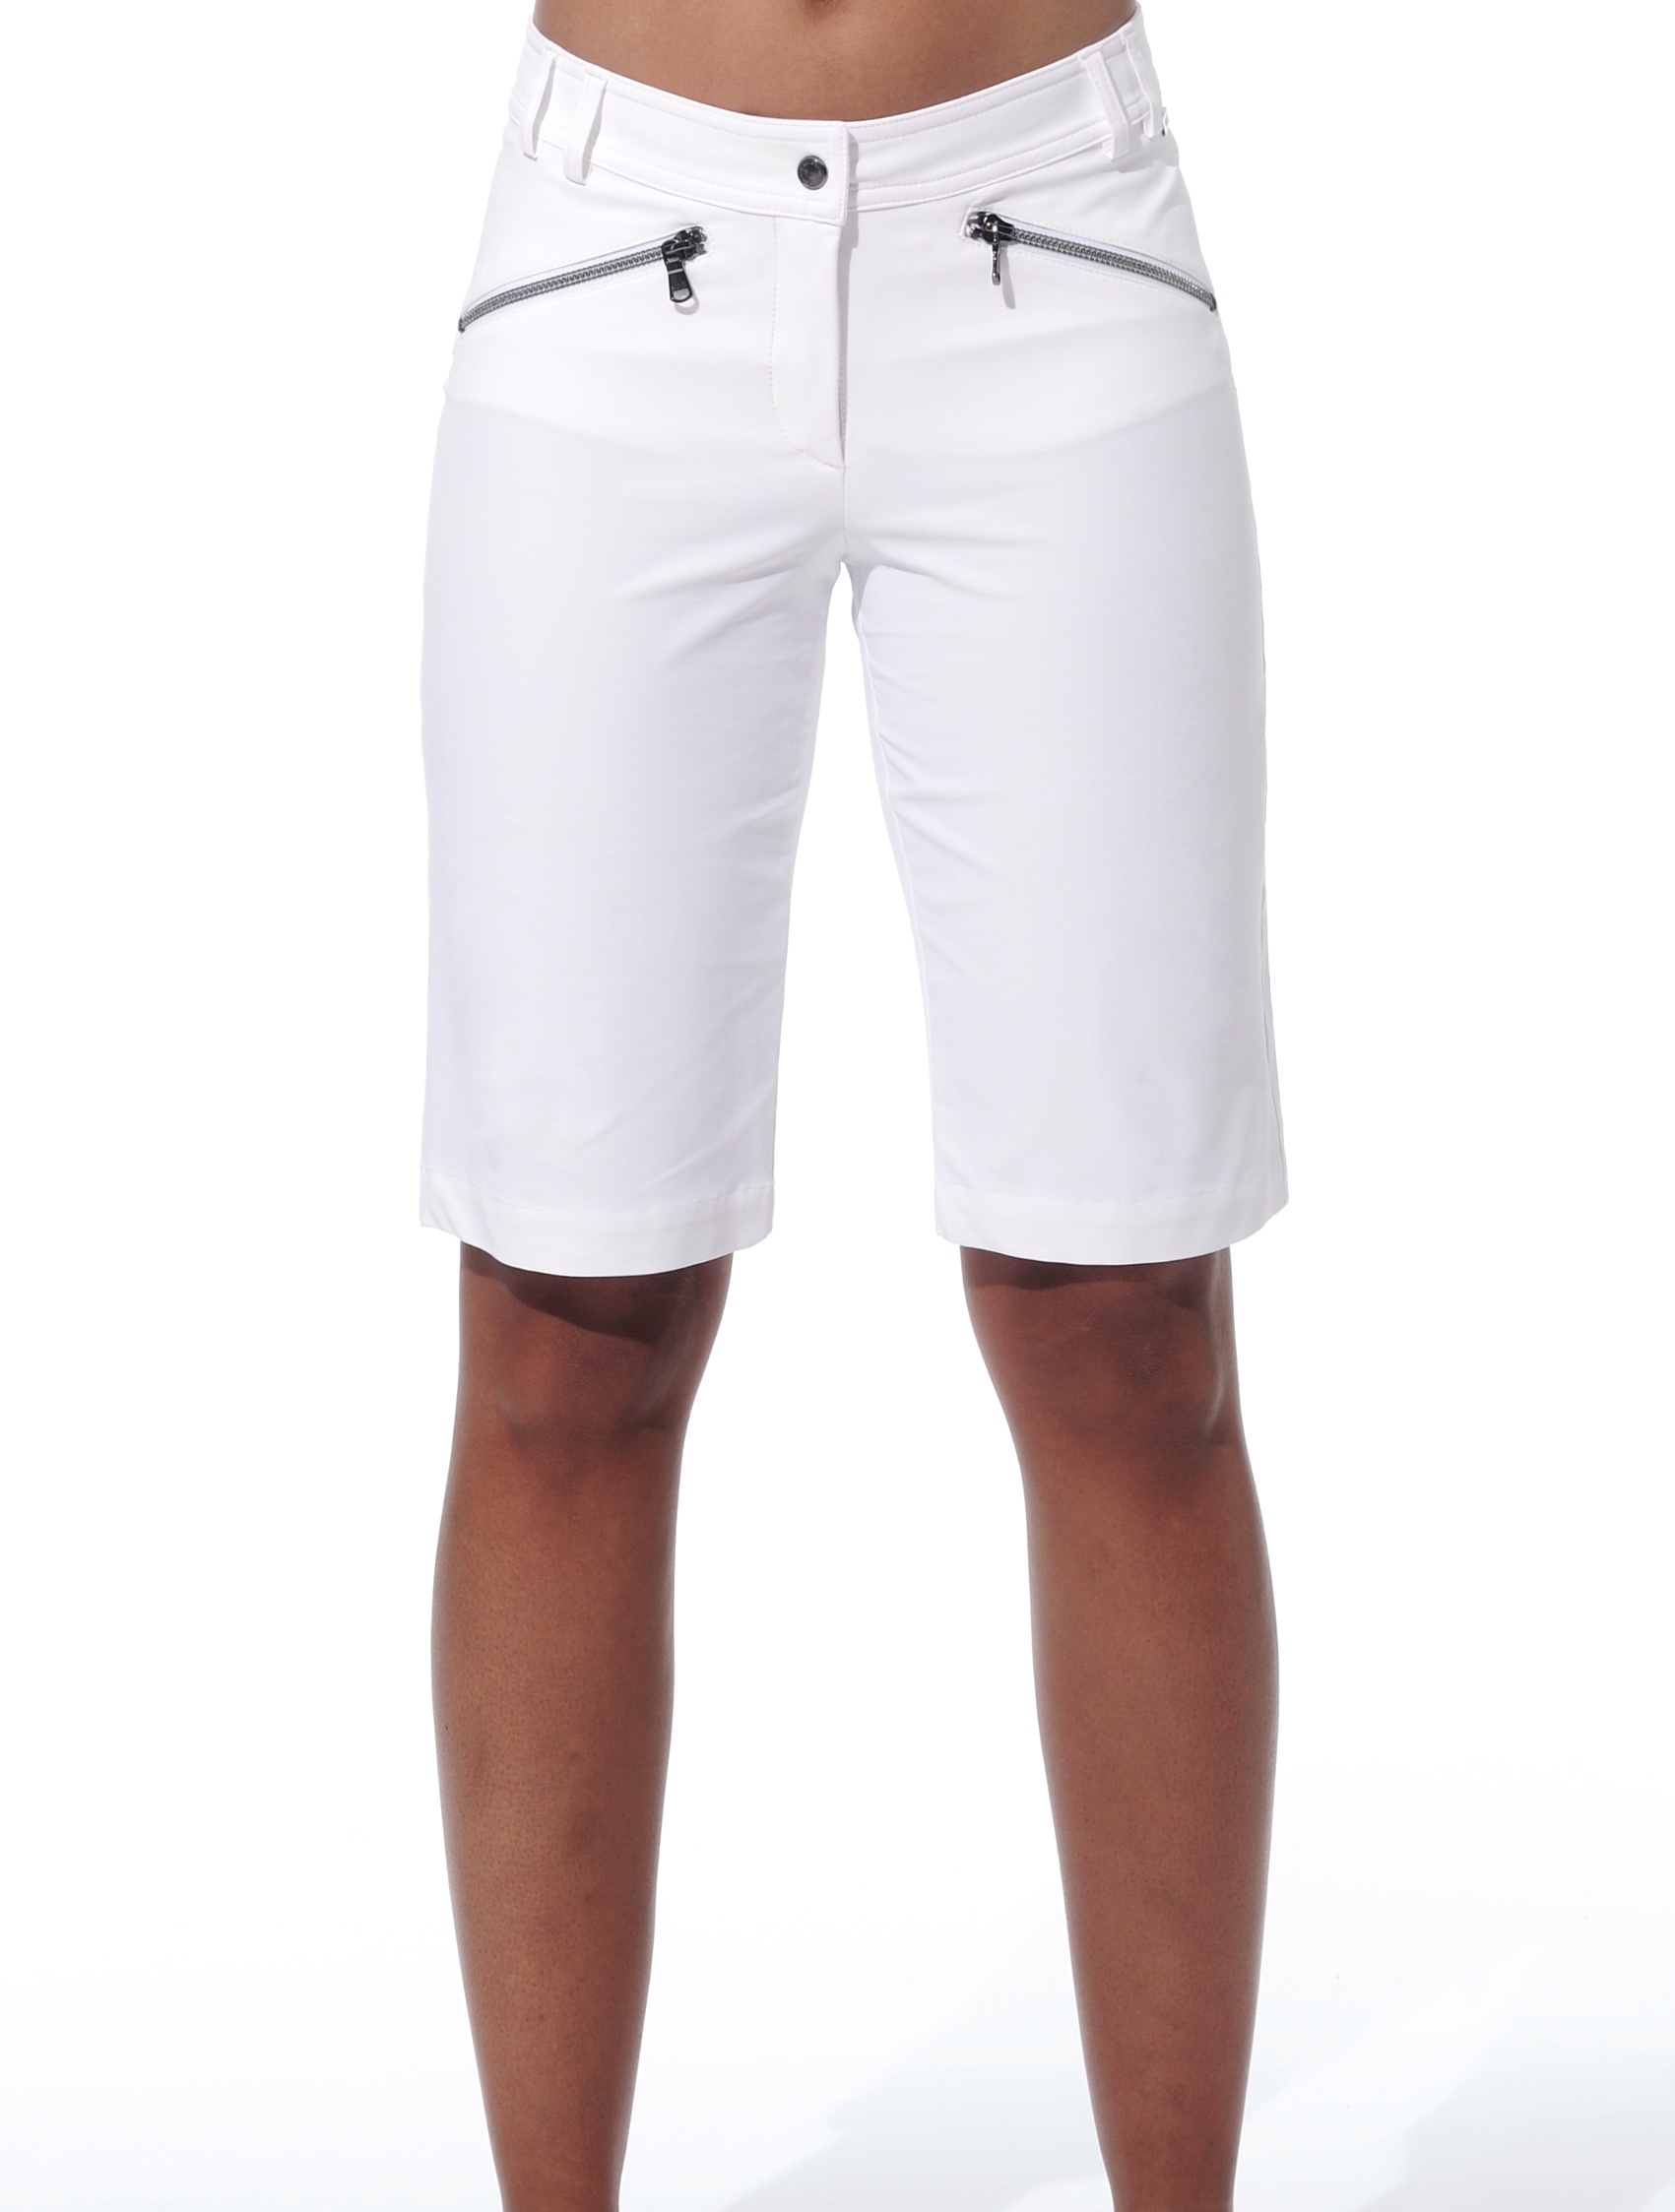 4way stretch bermuda shorts white 